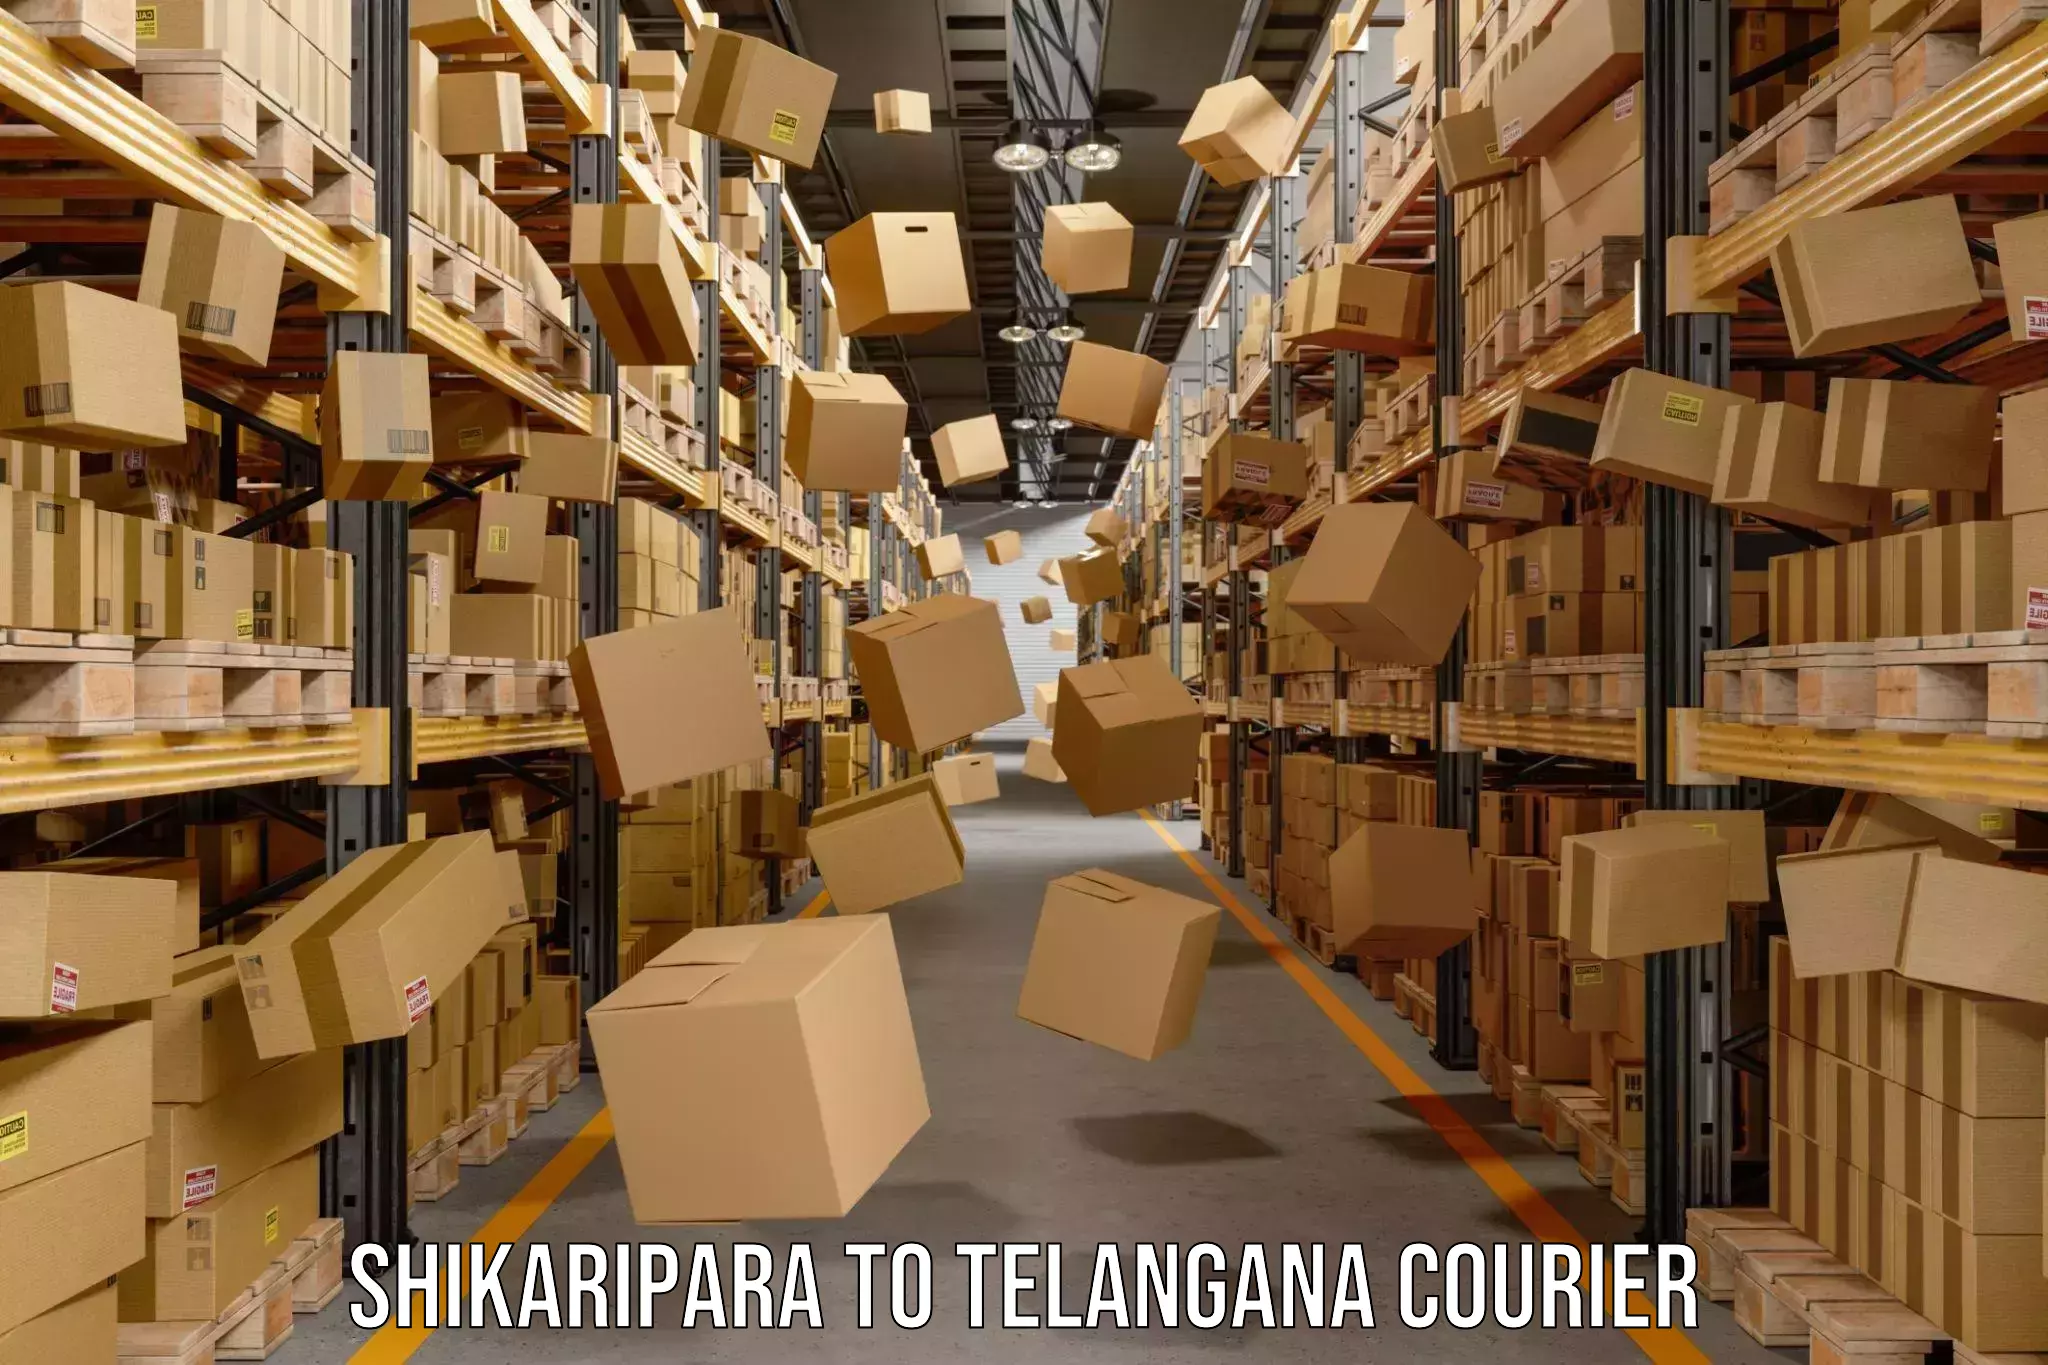 Courier service comparison Shikaripara to Dharmapuri Jagtial